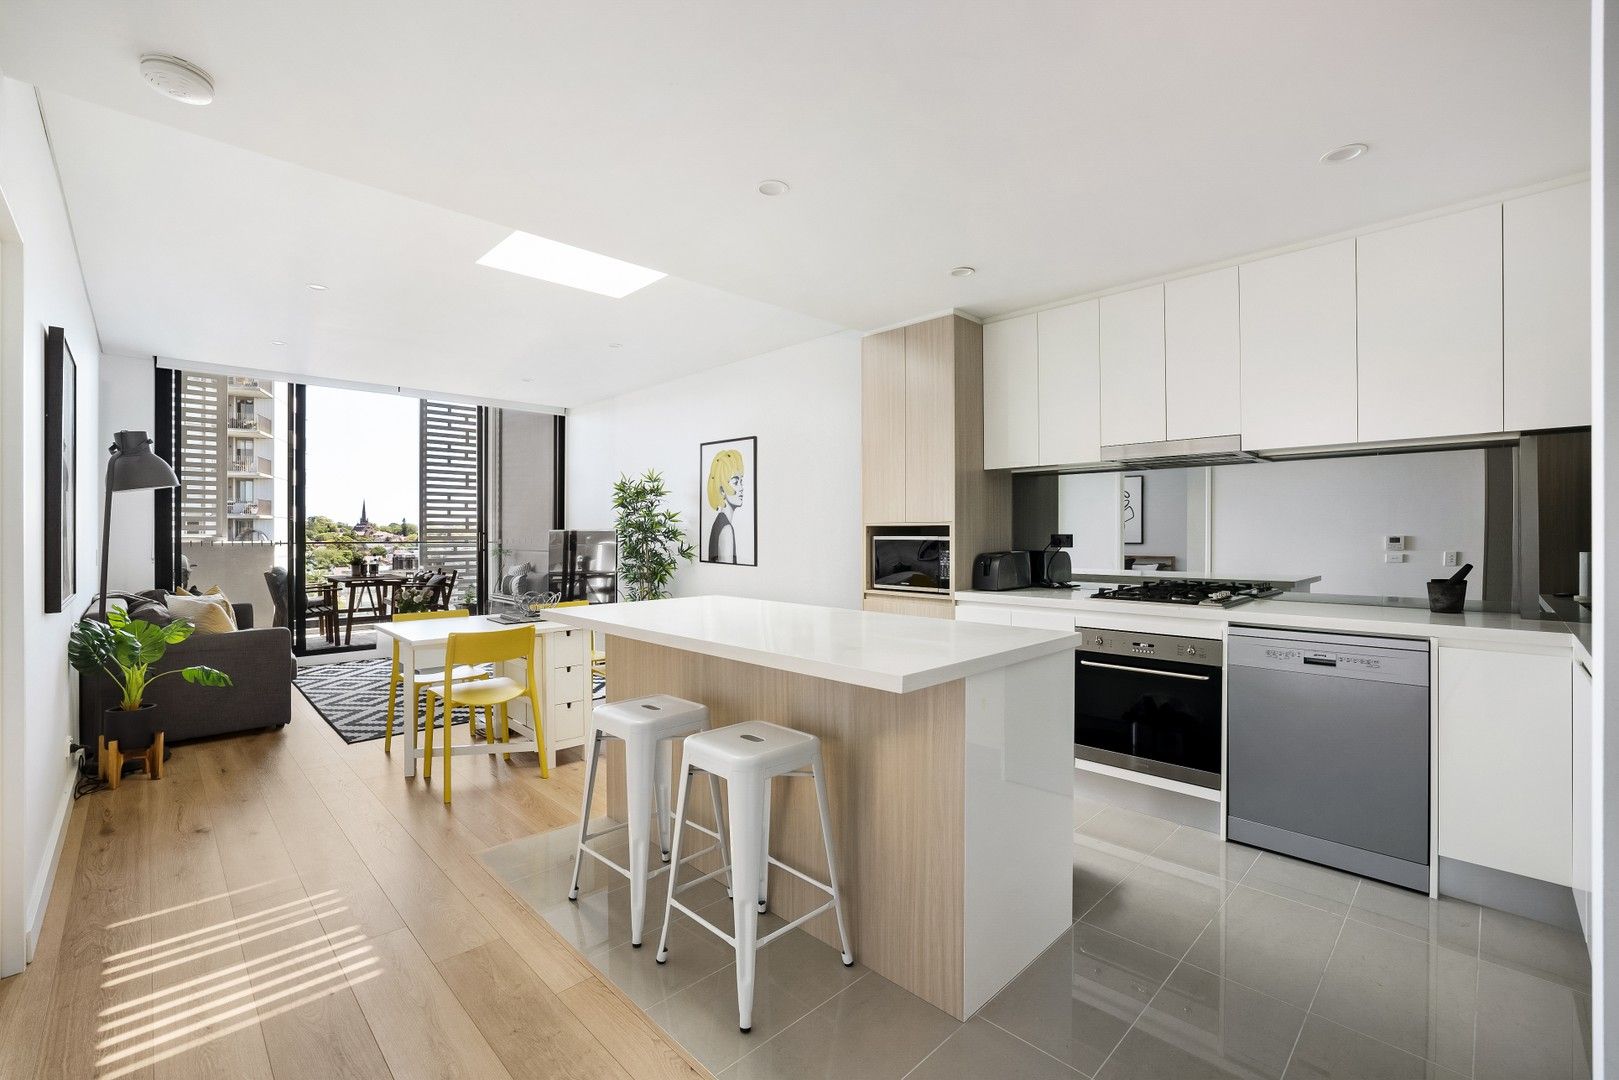 2 bedrooms Apartment / Unit / Flat in 703/14 McGill Street LEWISHAM NSW, 2049